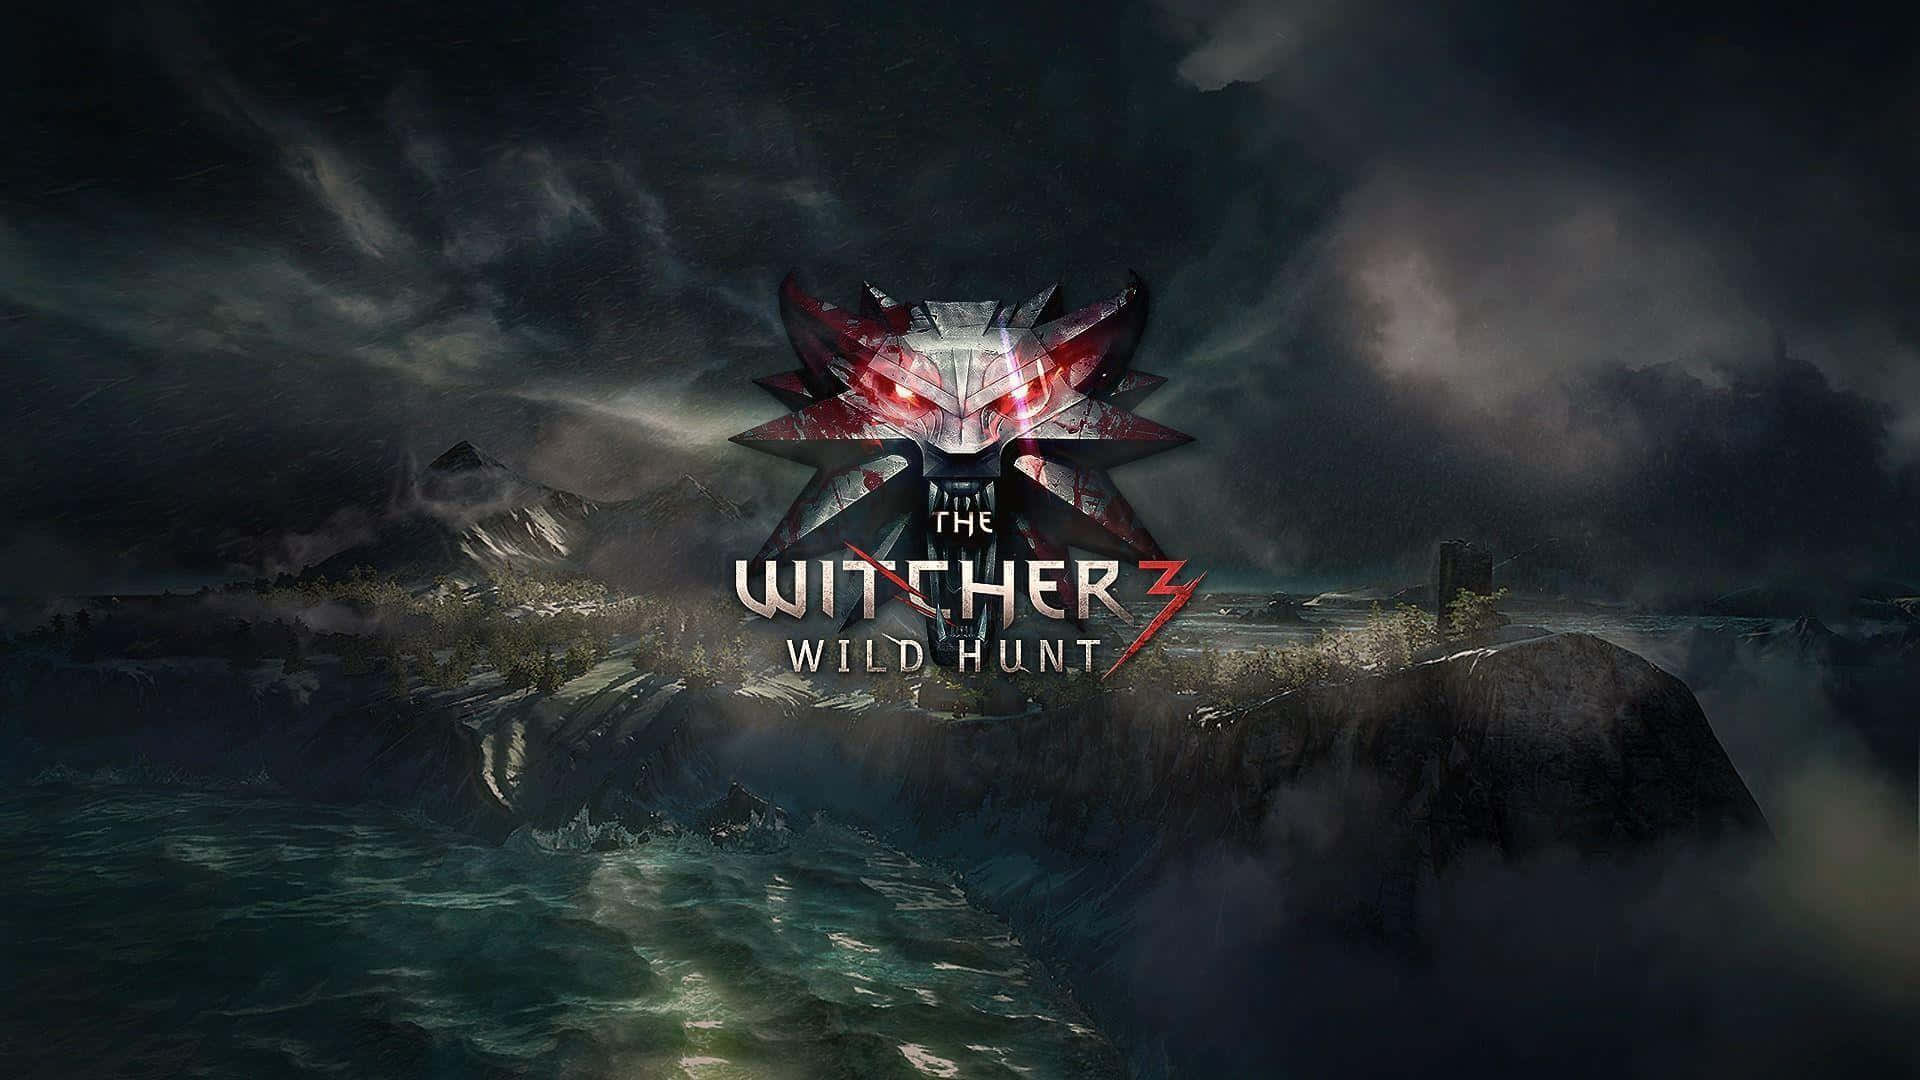 Den Witcher 3 Wild Hunt Fantastisk Ikonisk Wallpaper. Wallpaper